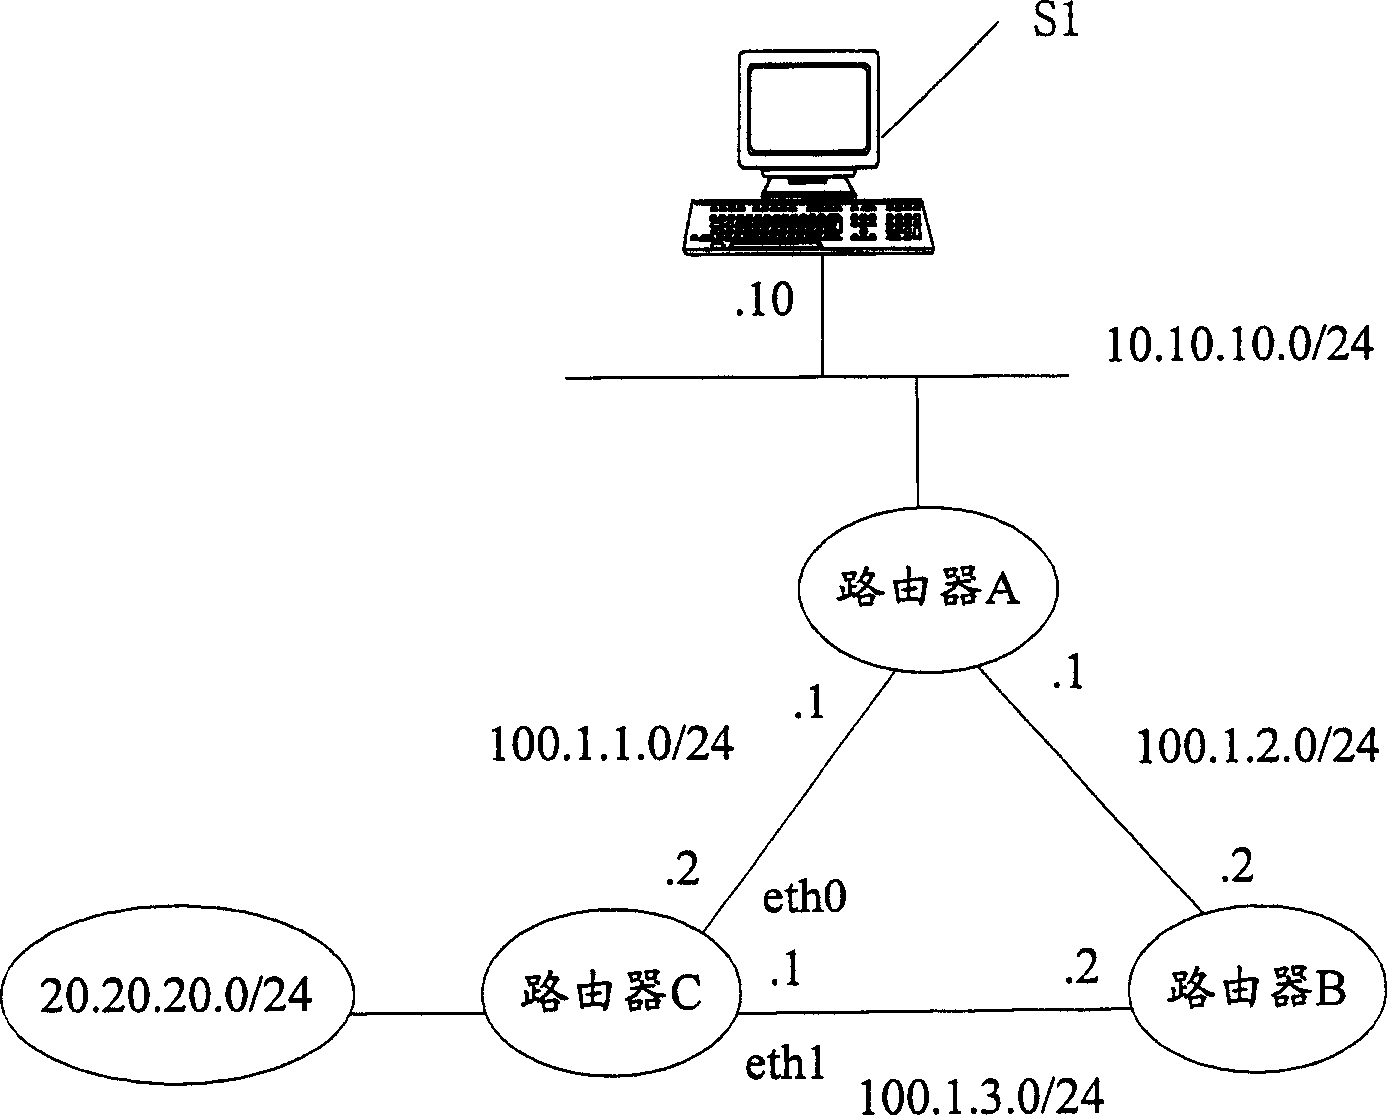 Single broadcast reverse path repeating method